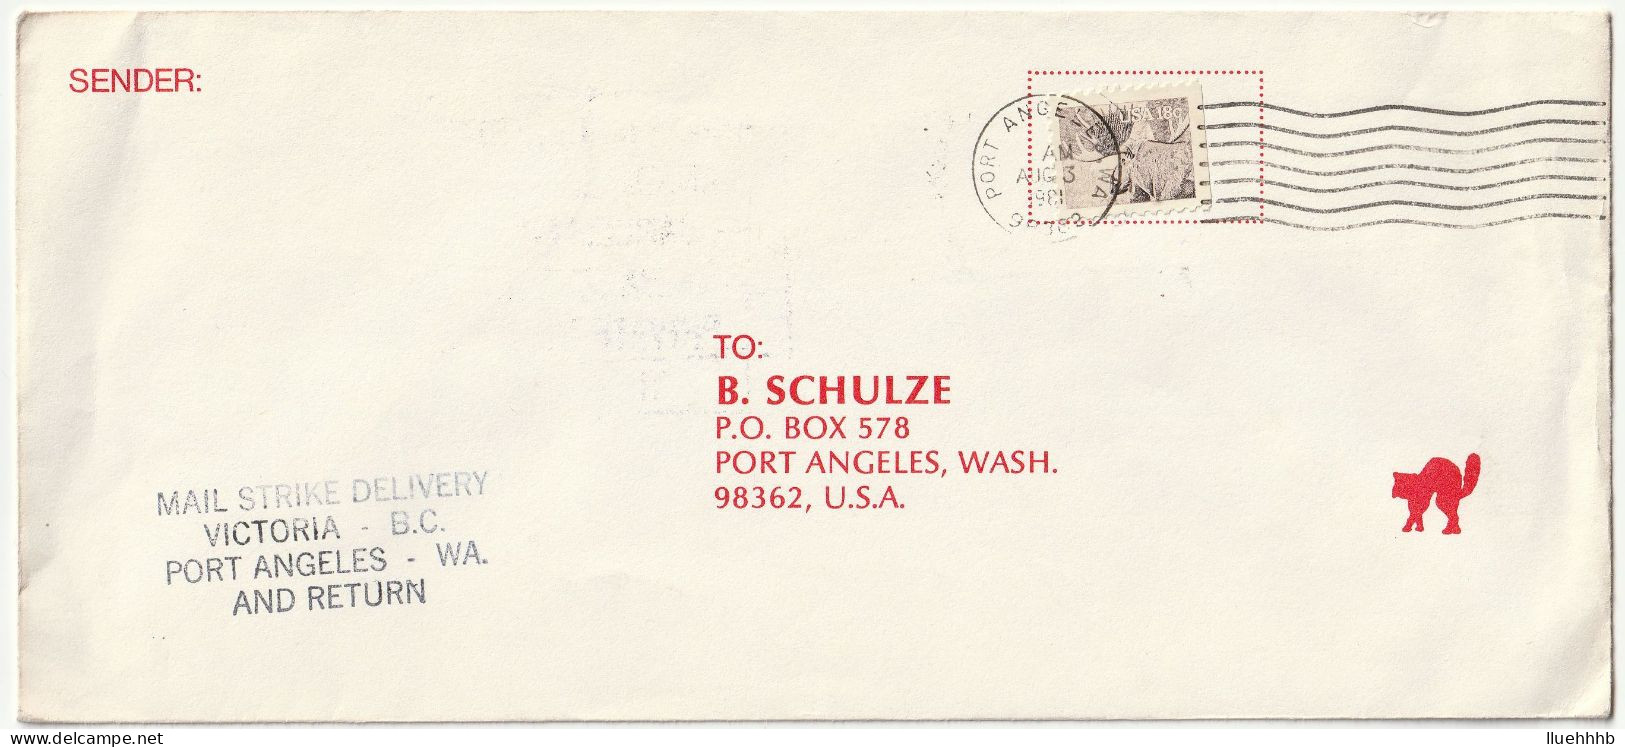 CANADA: 1981 Postal Strike Cover To USA, VICTORIA BC - PORT ANGELES USA $1.85 Label - Viñetas Locales Y Privadas